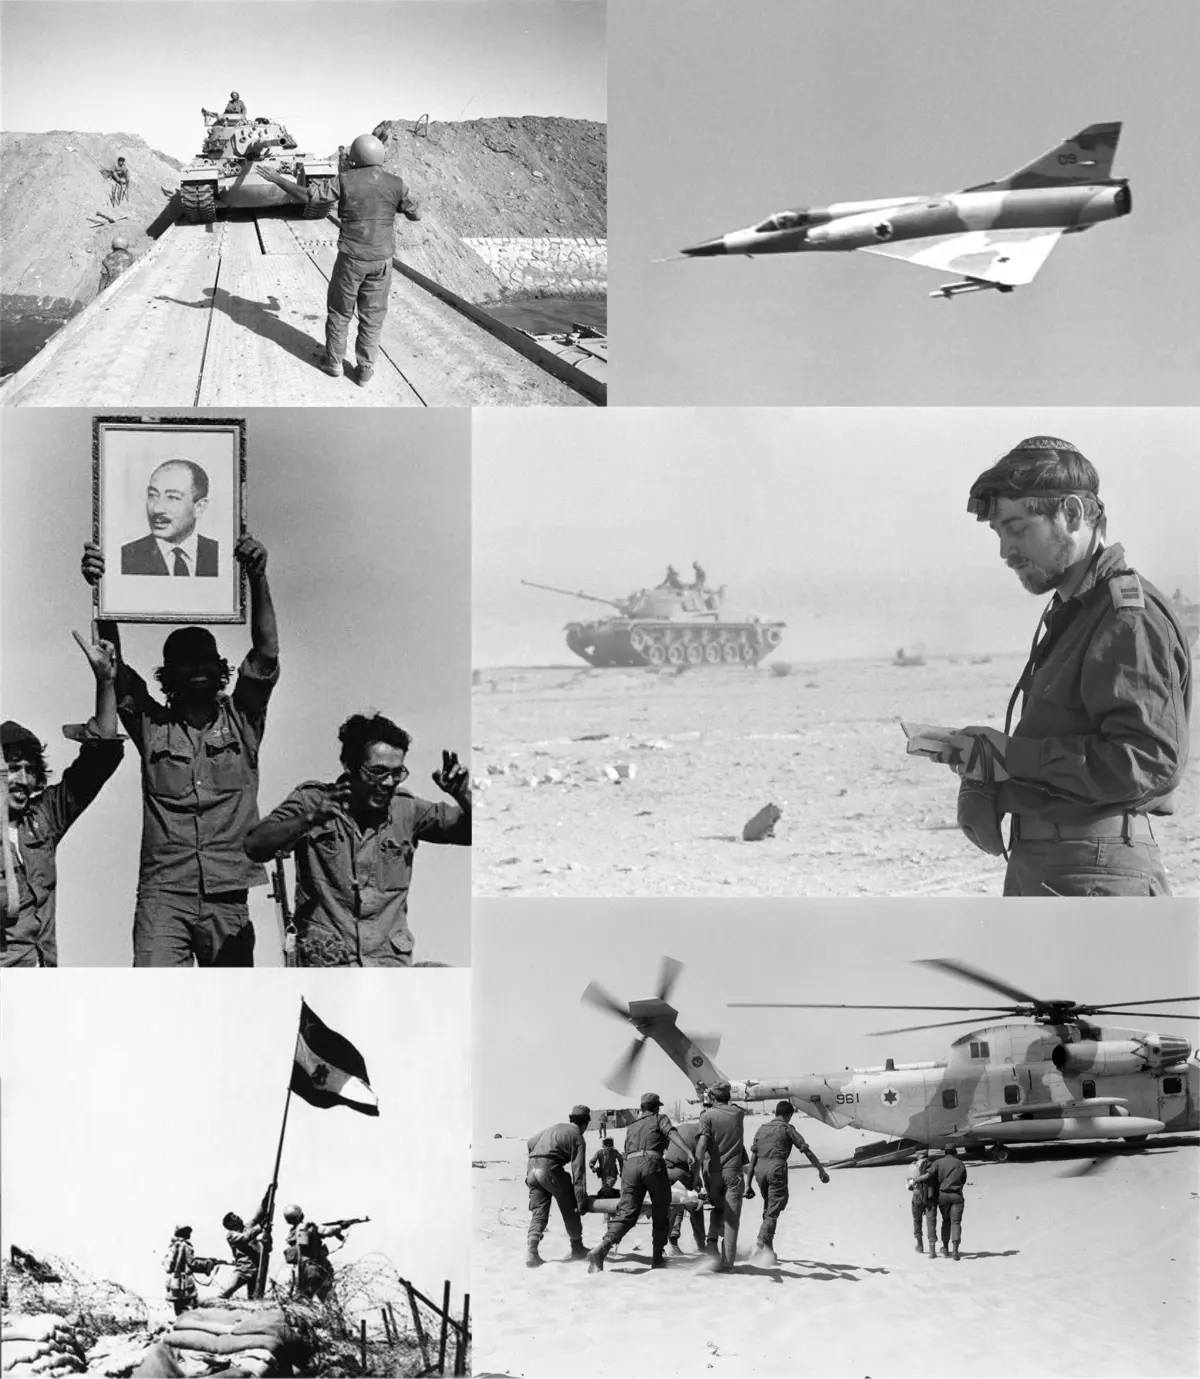 guerra de yom kippur resumen corto - Que ganó Israel en la Guerra de Yom Kippur